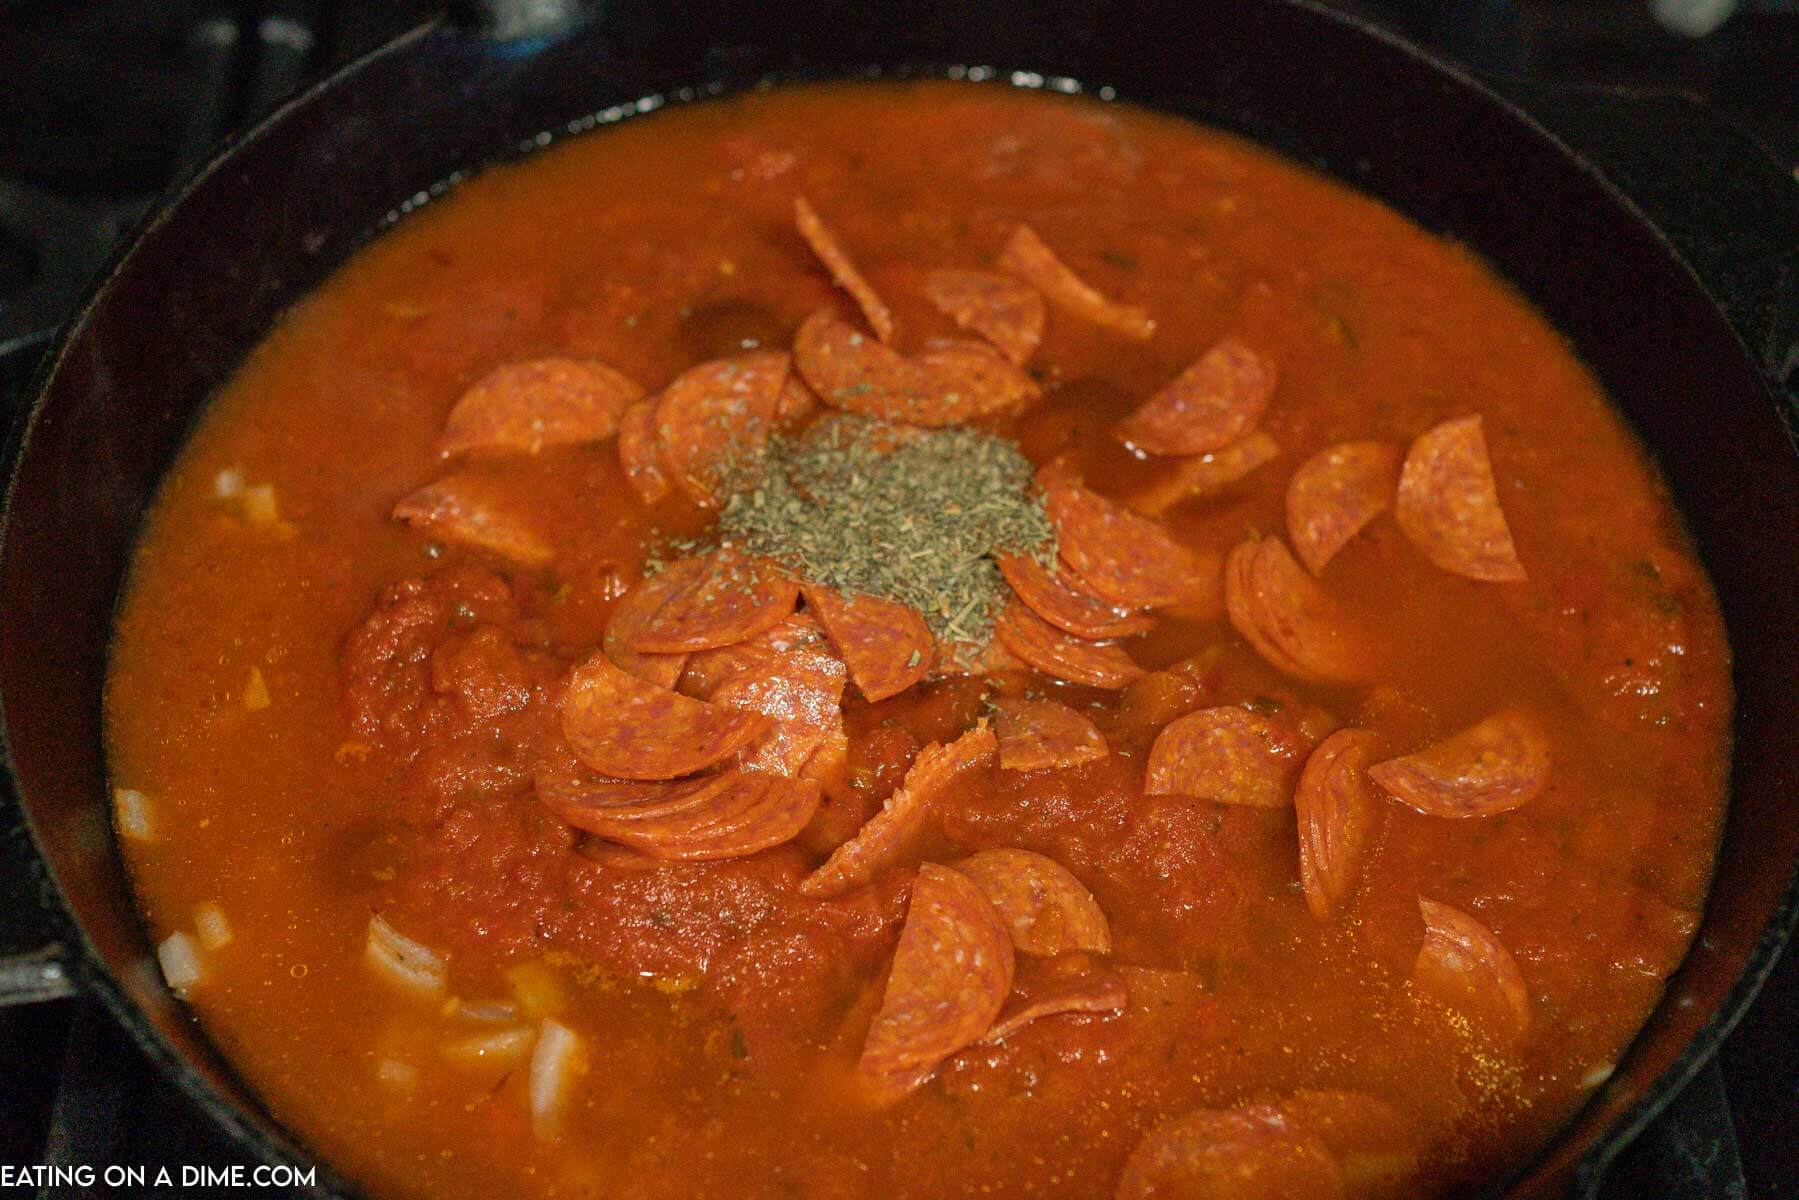 heating the marinara sauce, pepperoni, and seasoning in an iron skillet